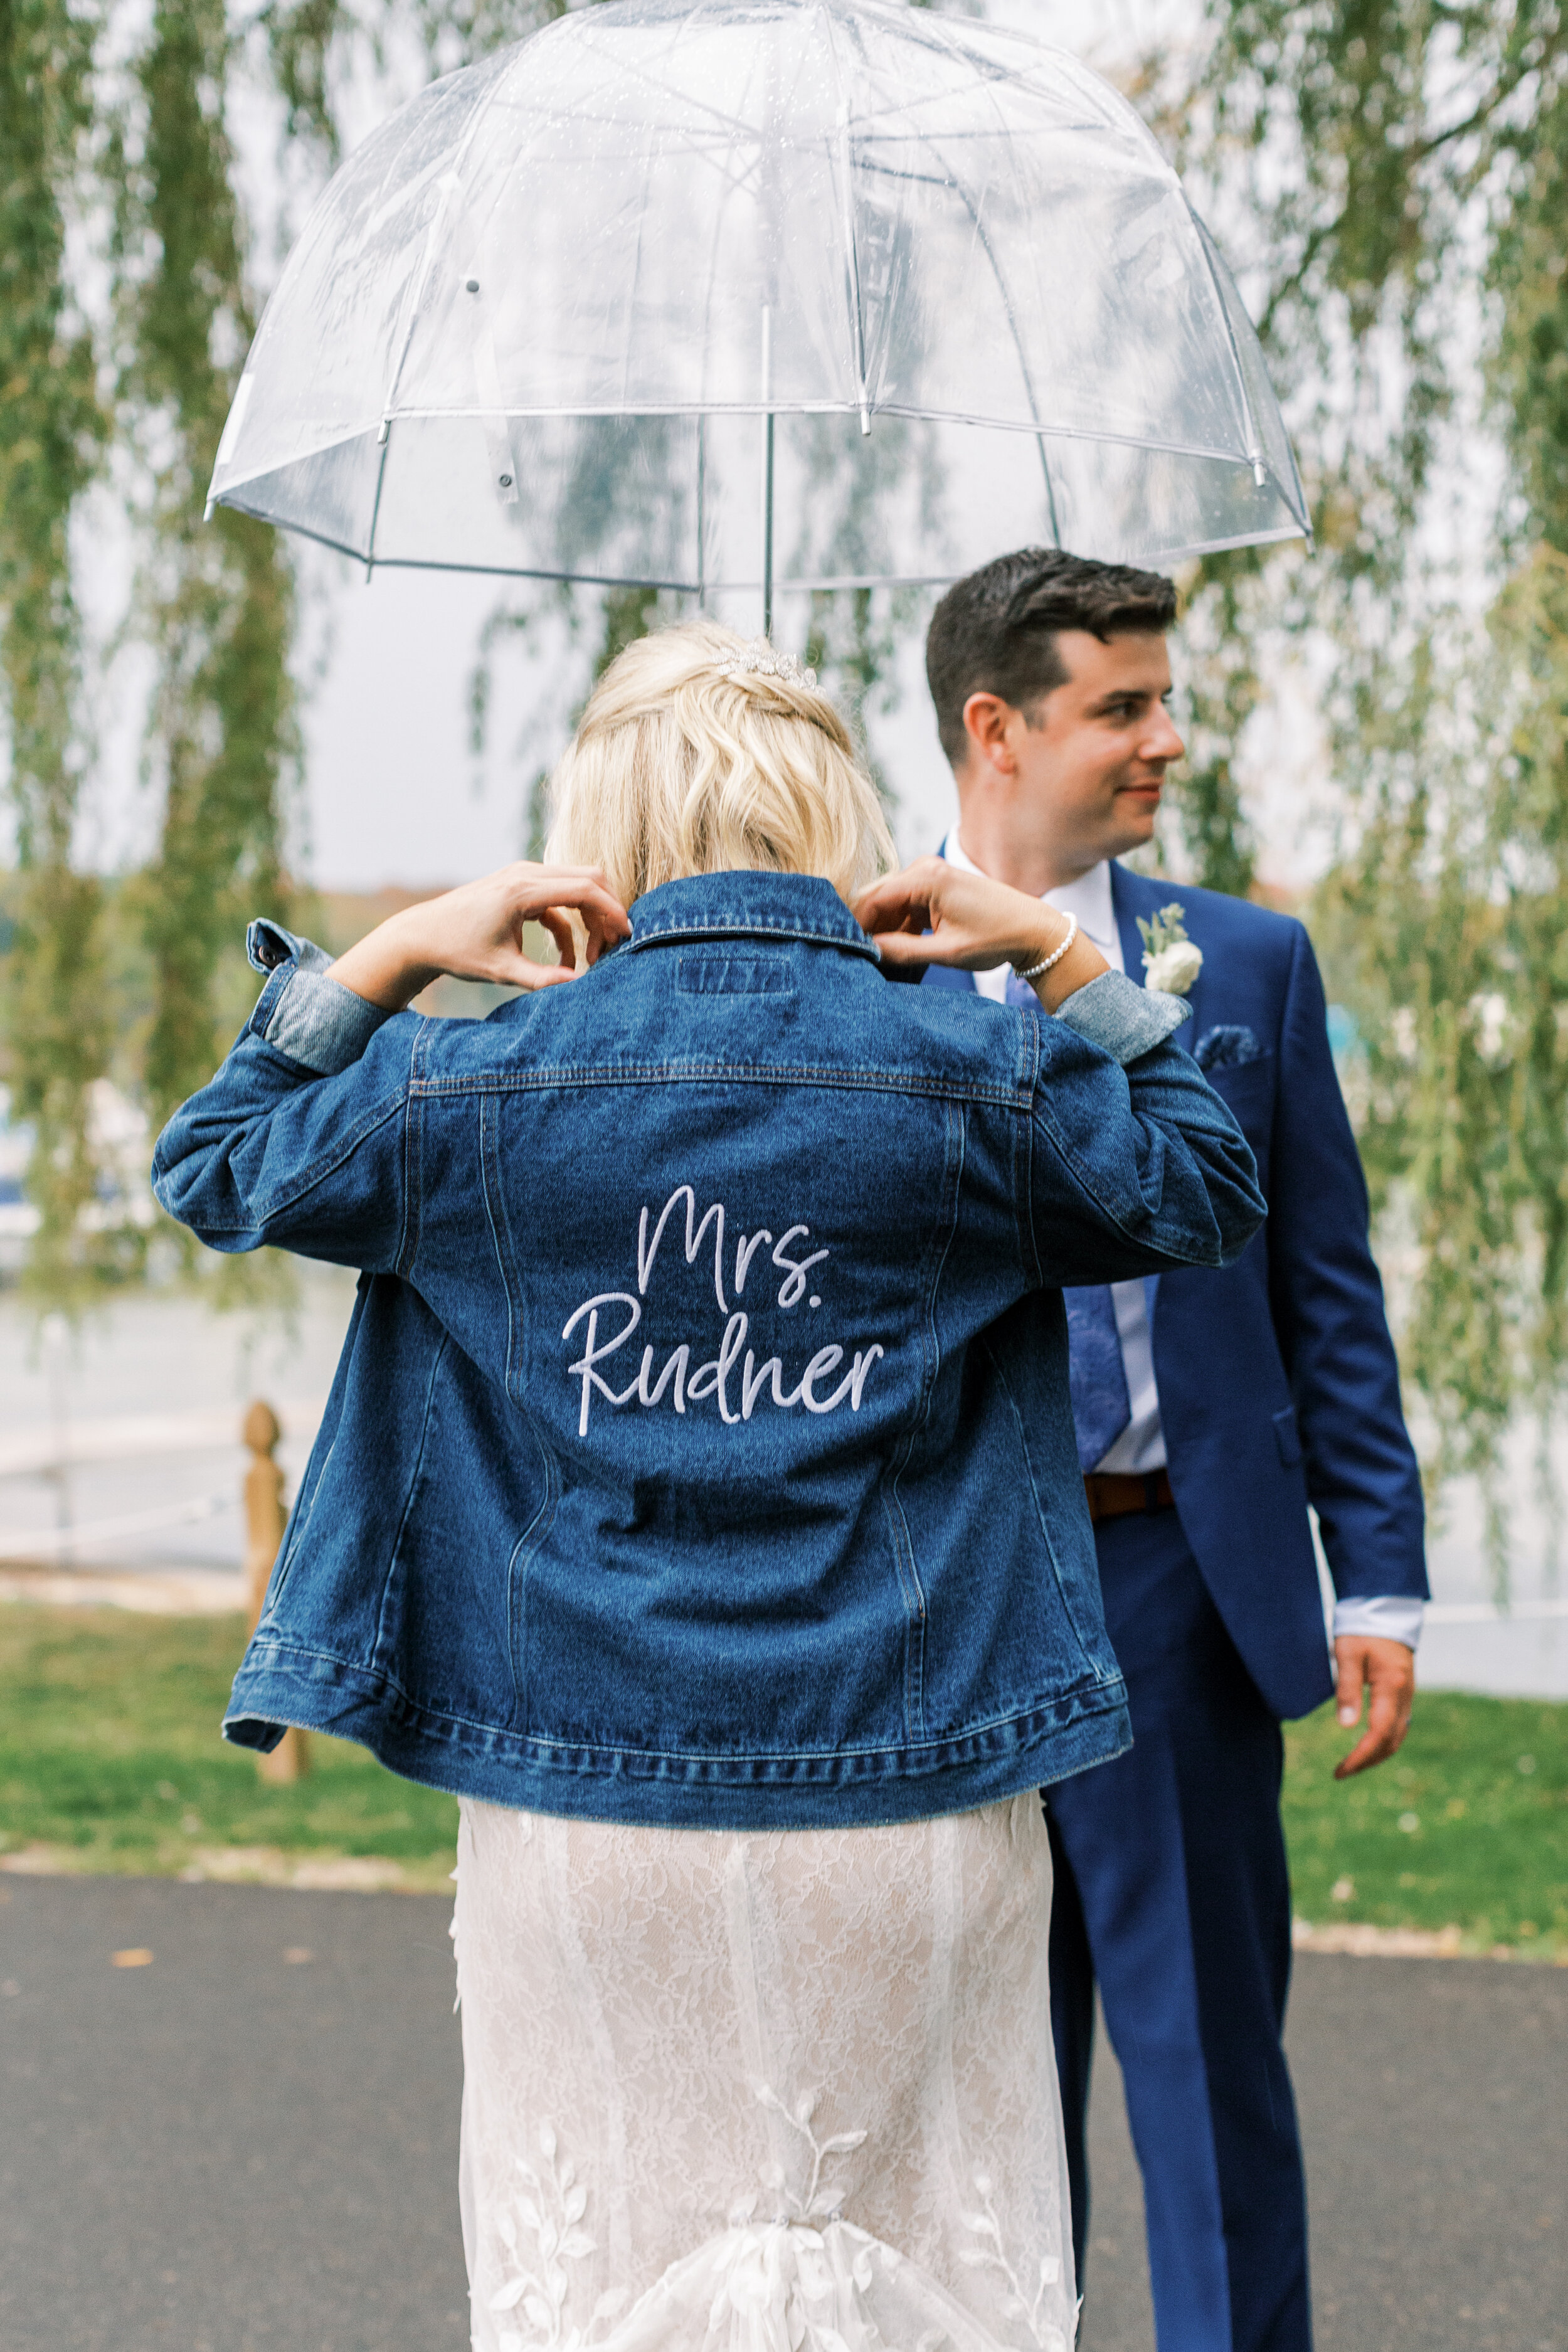 Rudner+Wedding+Post+Ceremony2-11.jpg